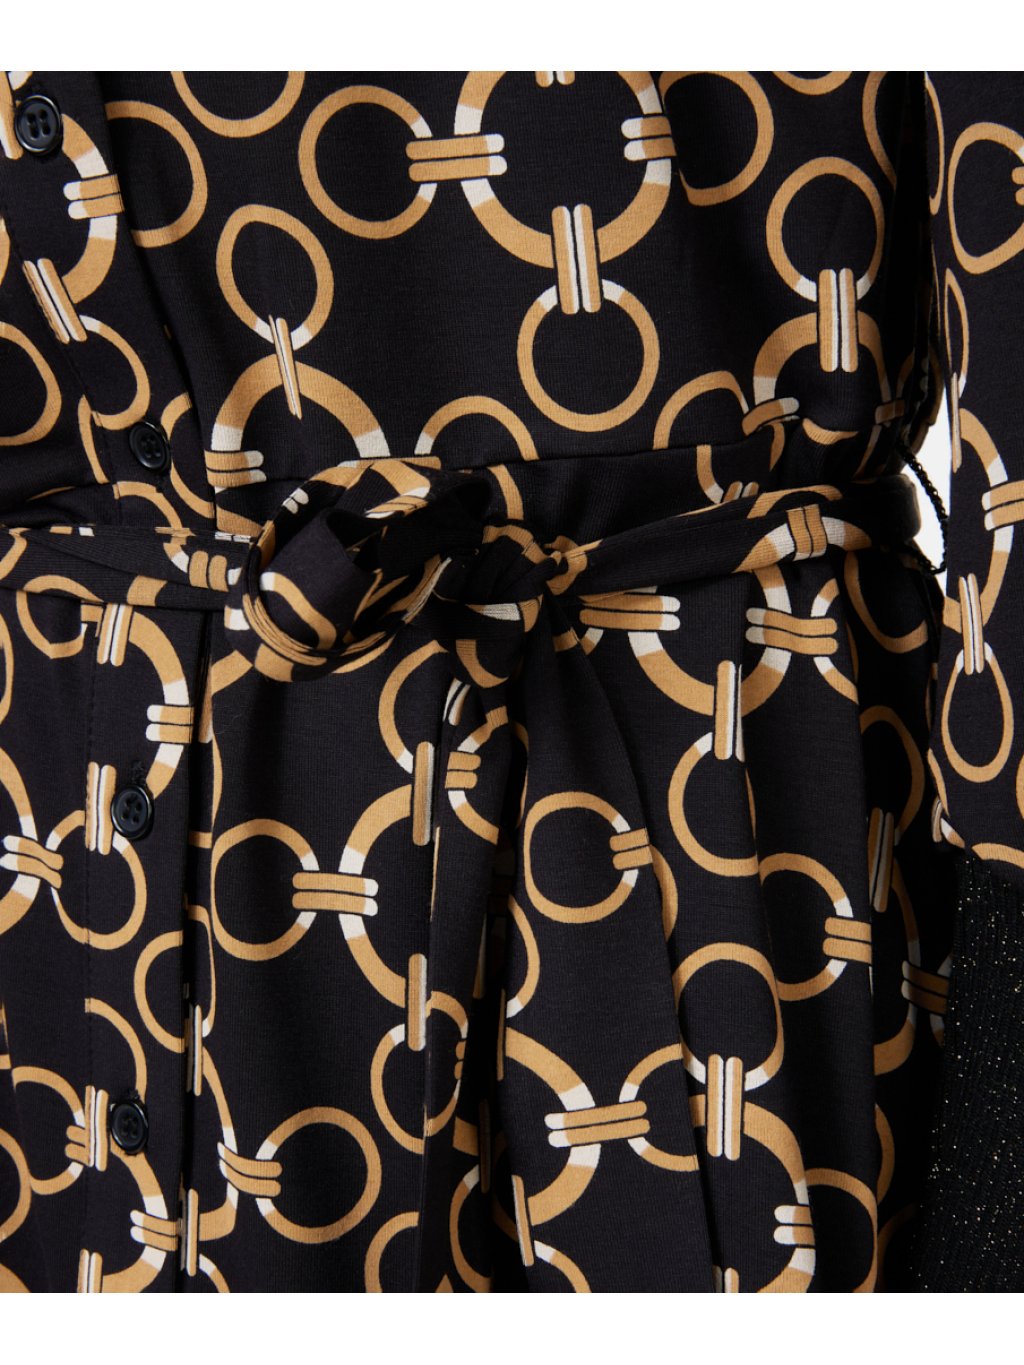 Šaty Esqualo 30709 černobéžové propínací do A chain print